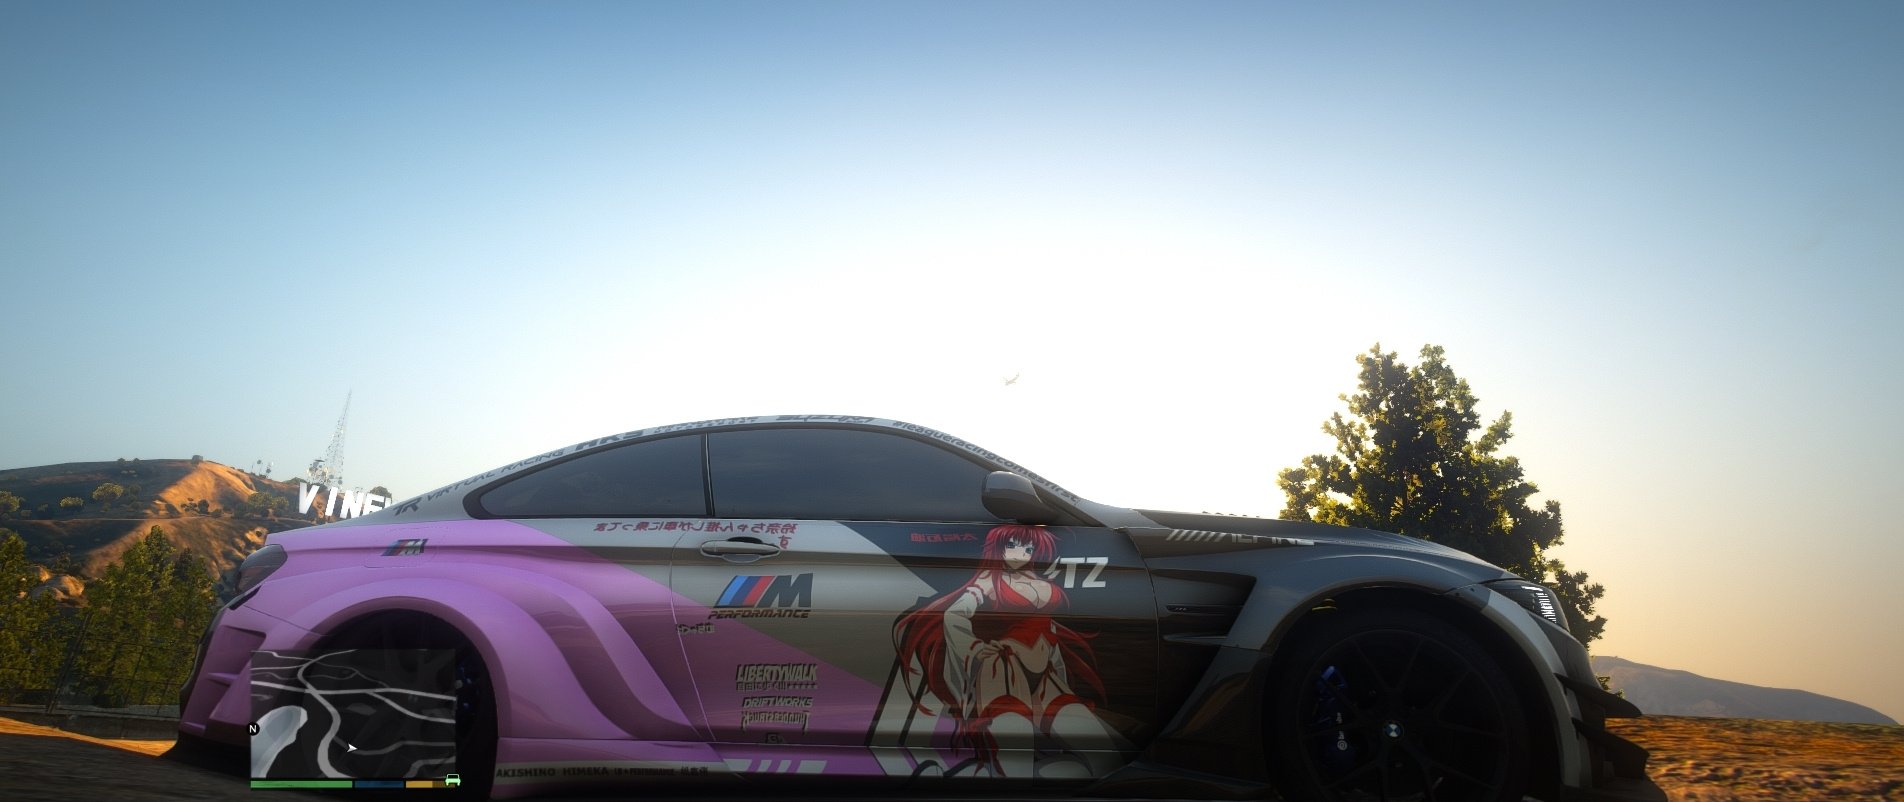 ANIME] Pacific Racing unveils their Girls und Panzer drift car – So Japan